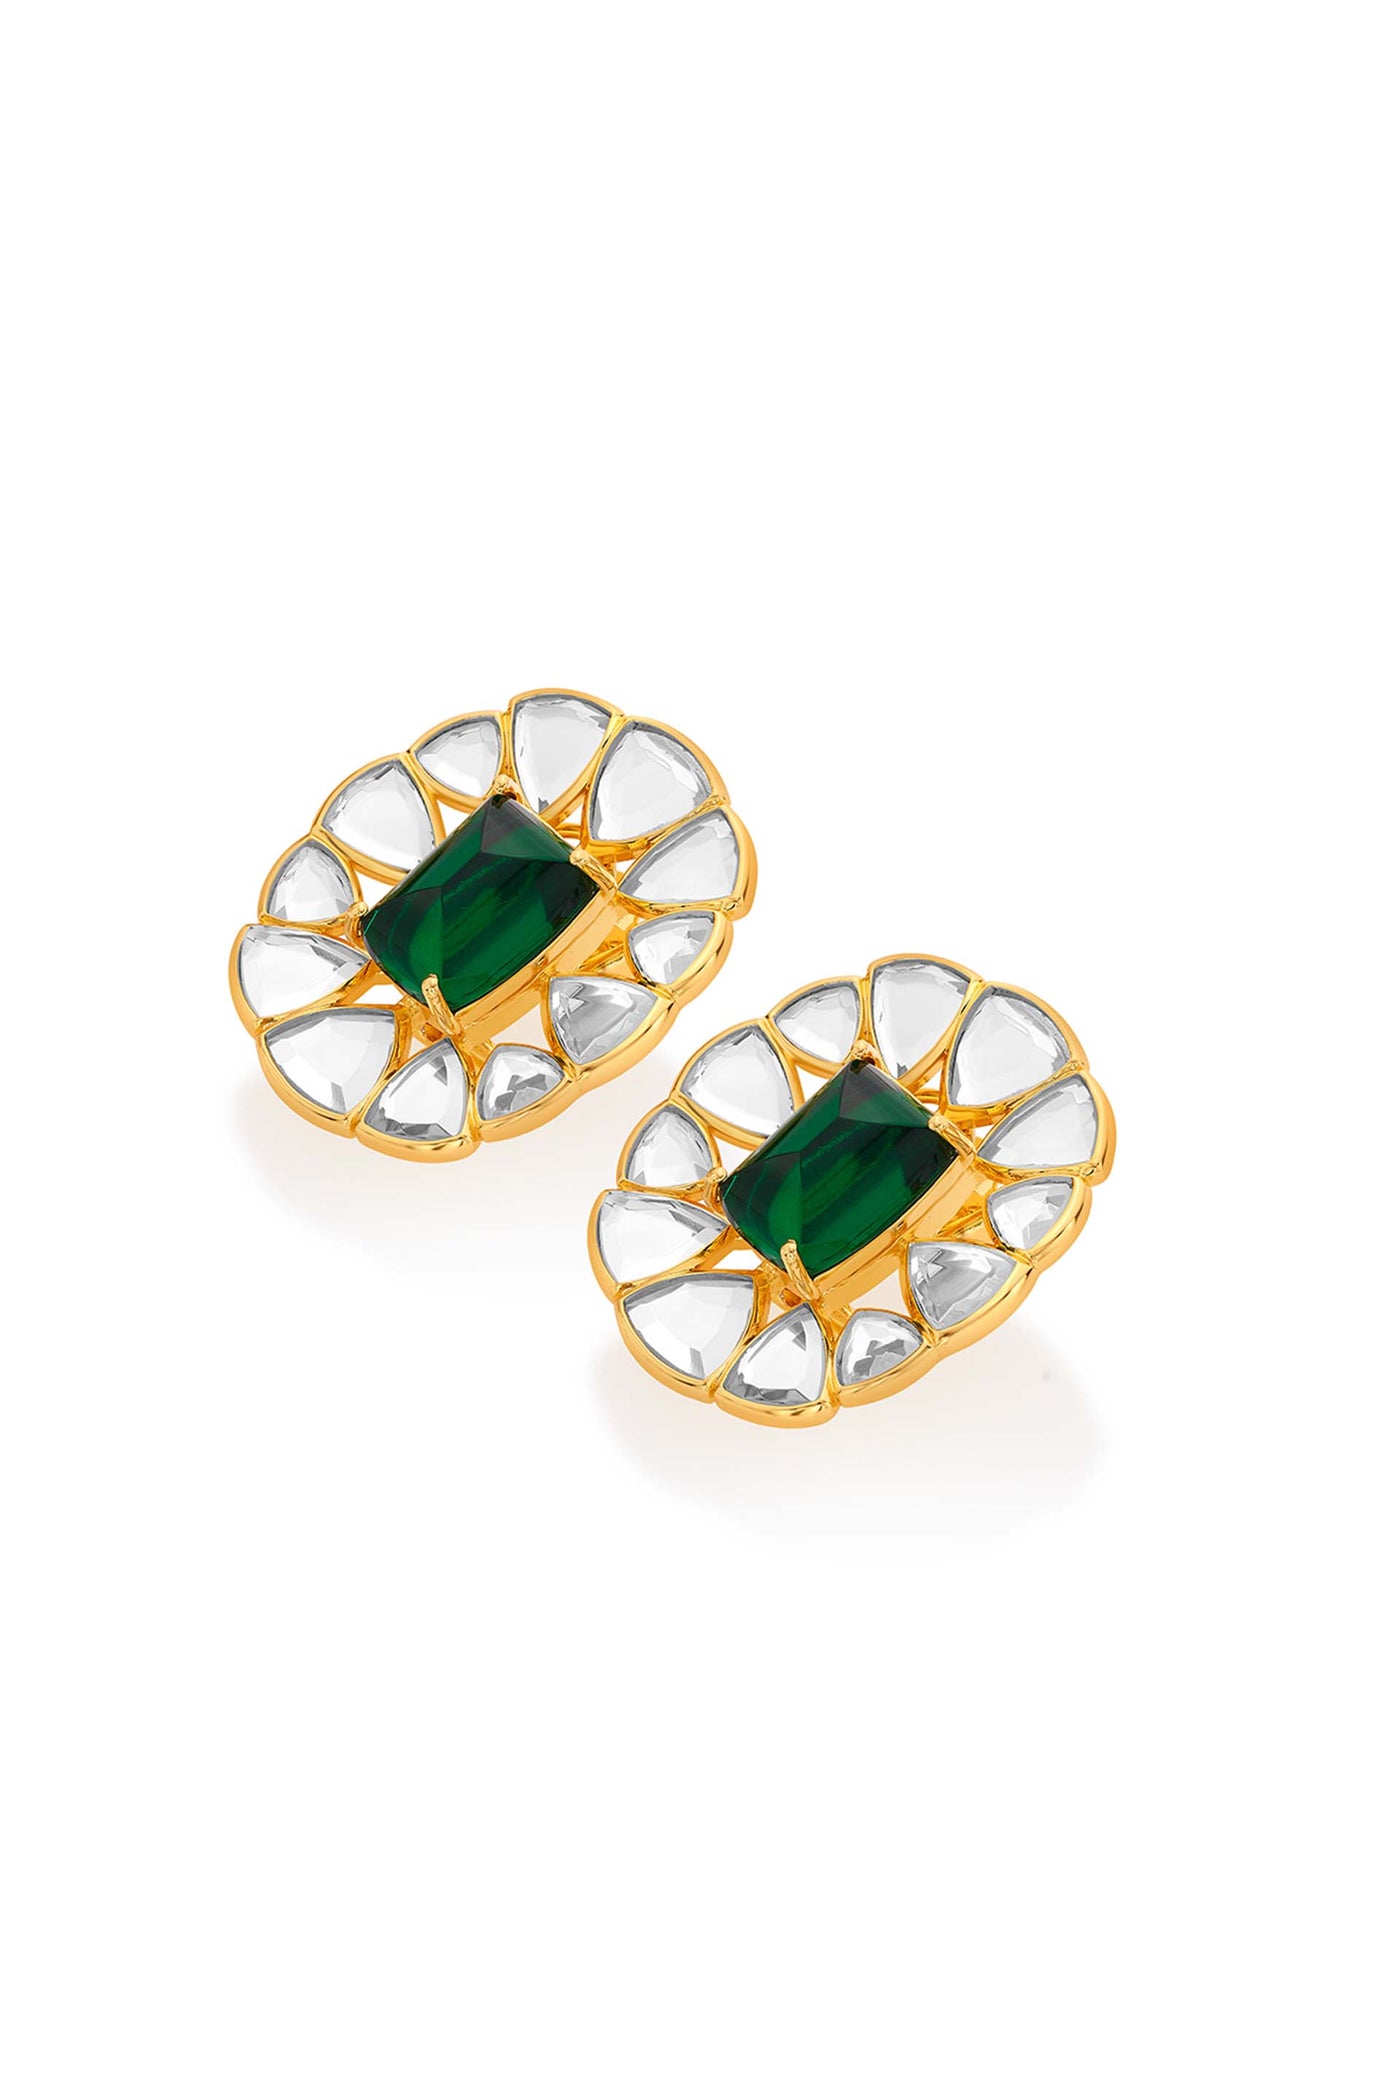 Isharya Ruhaniyat Mirror & Hydro Emerald Studs green gold fashion jewellery online shopping melange singapore indian designer wear